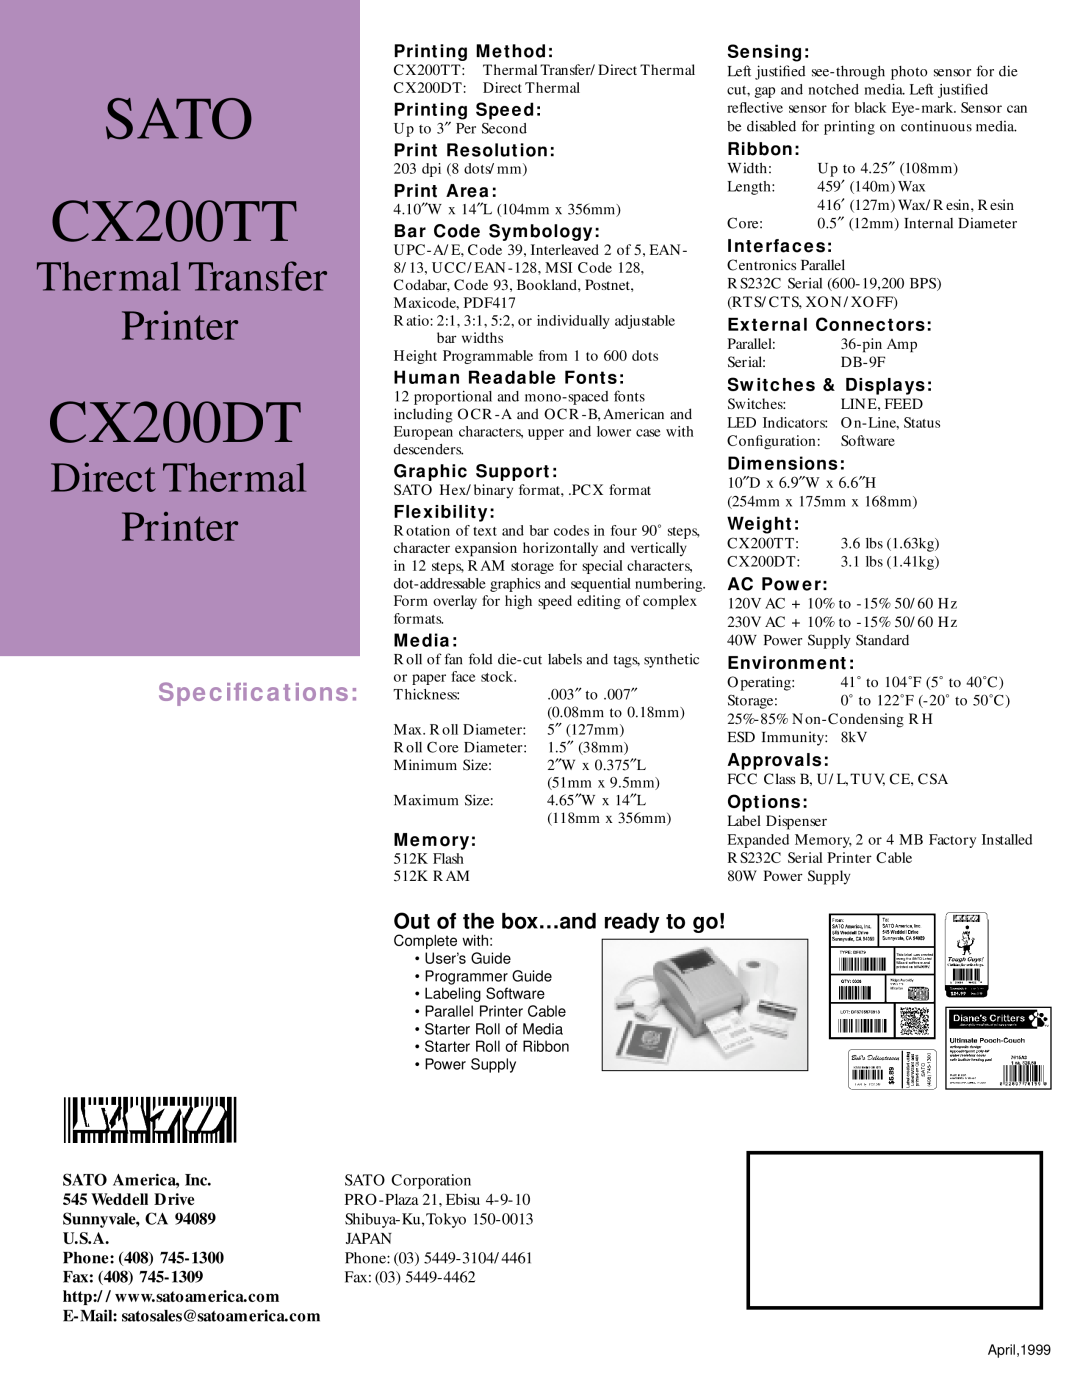 SATO manual SATO CX200TT, CX200DT, Thermal Transfer Printer, Direct Thermal Printer, Speciﬁcations 